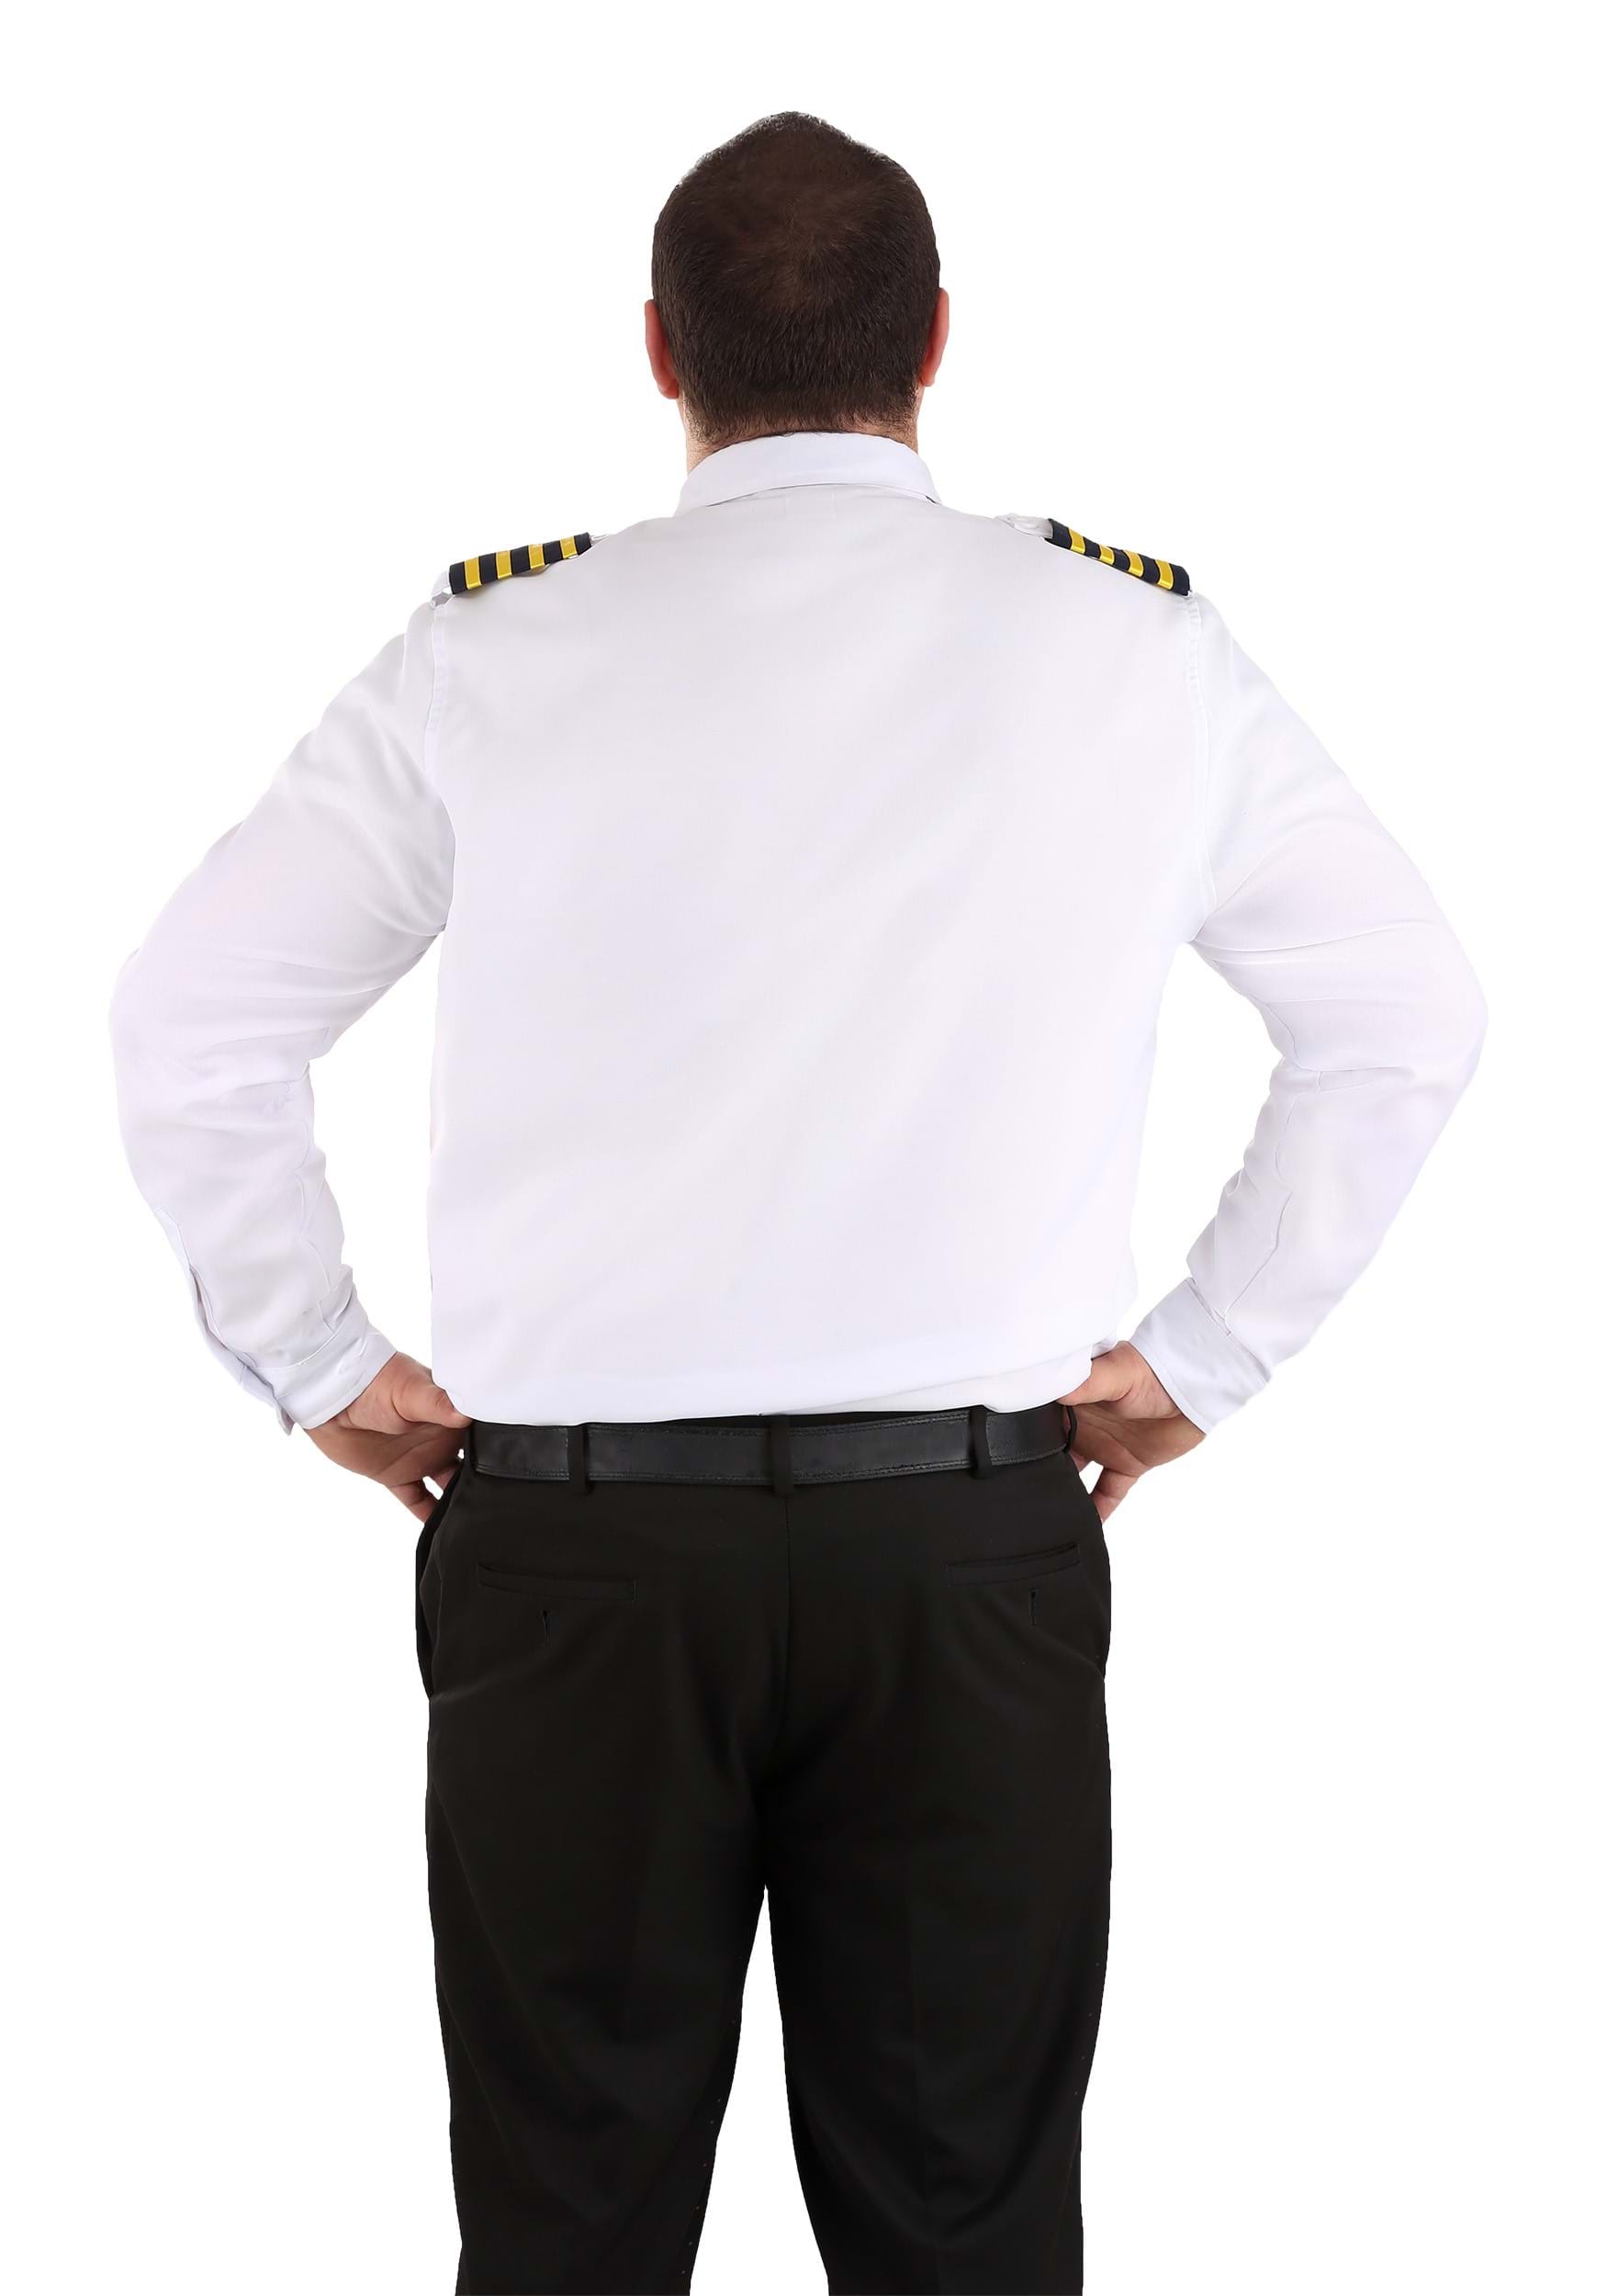 Plus Size Airline Pilot Adult Costume Shirt